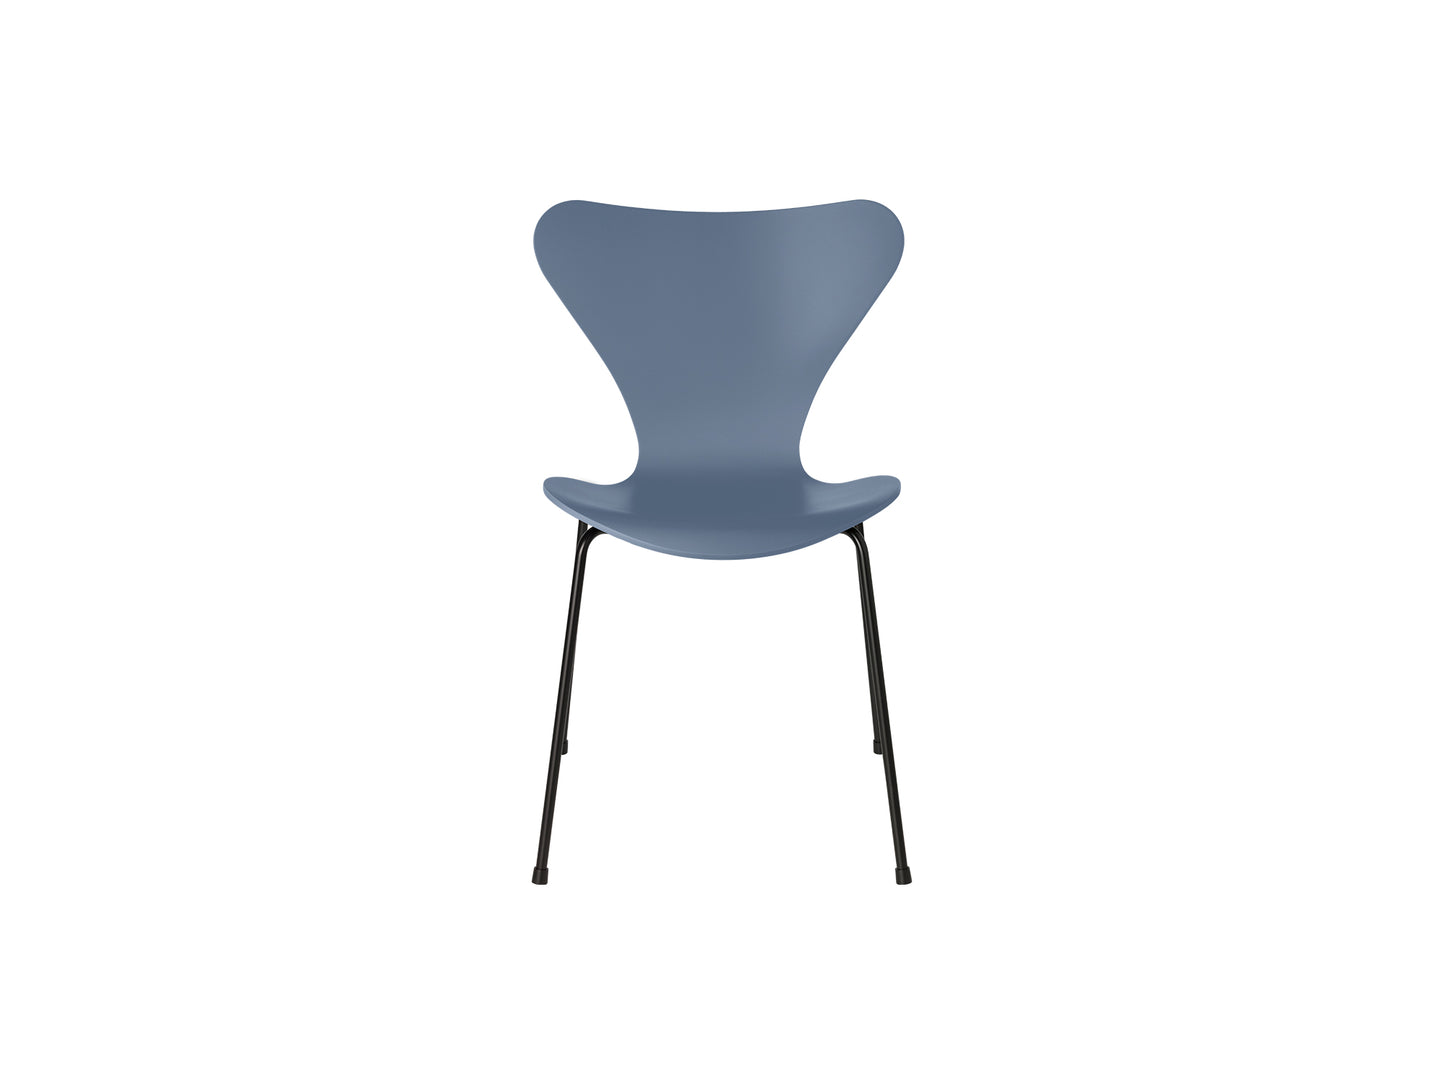 Series 7™ 3107 Dining Chair by Fritz Hansen - Dusk Blue Lacquered Veneer Shell / Black Steel